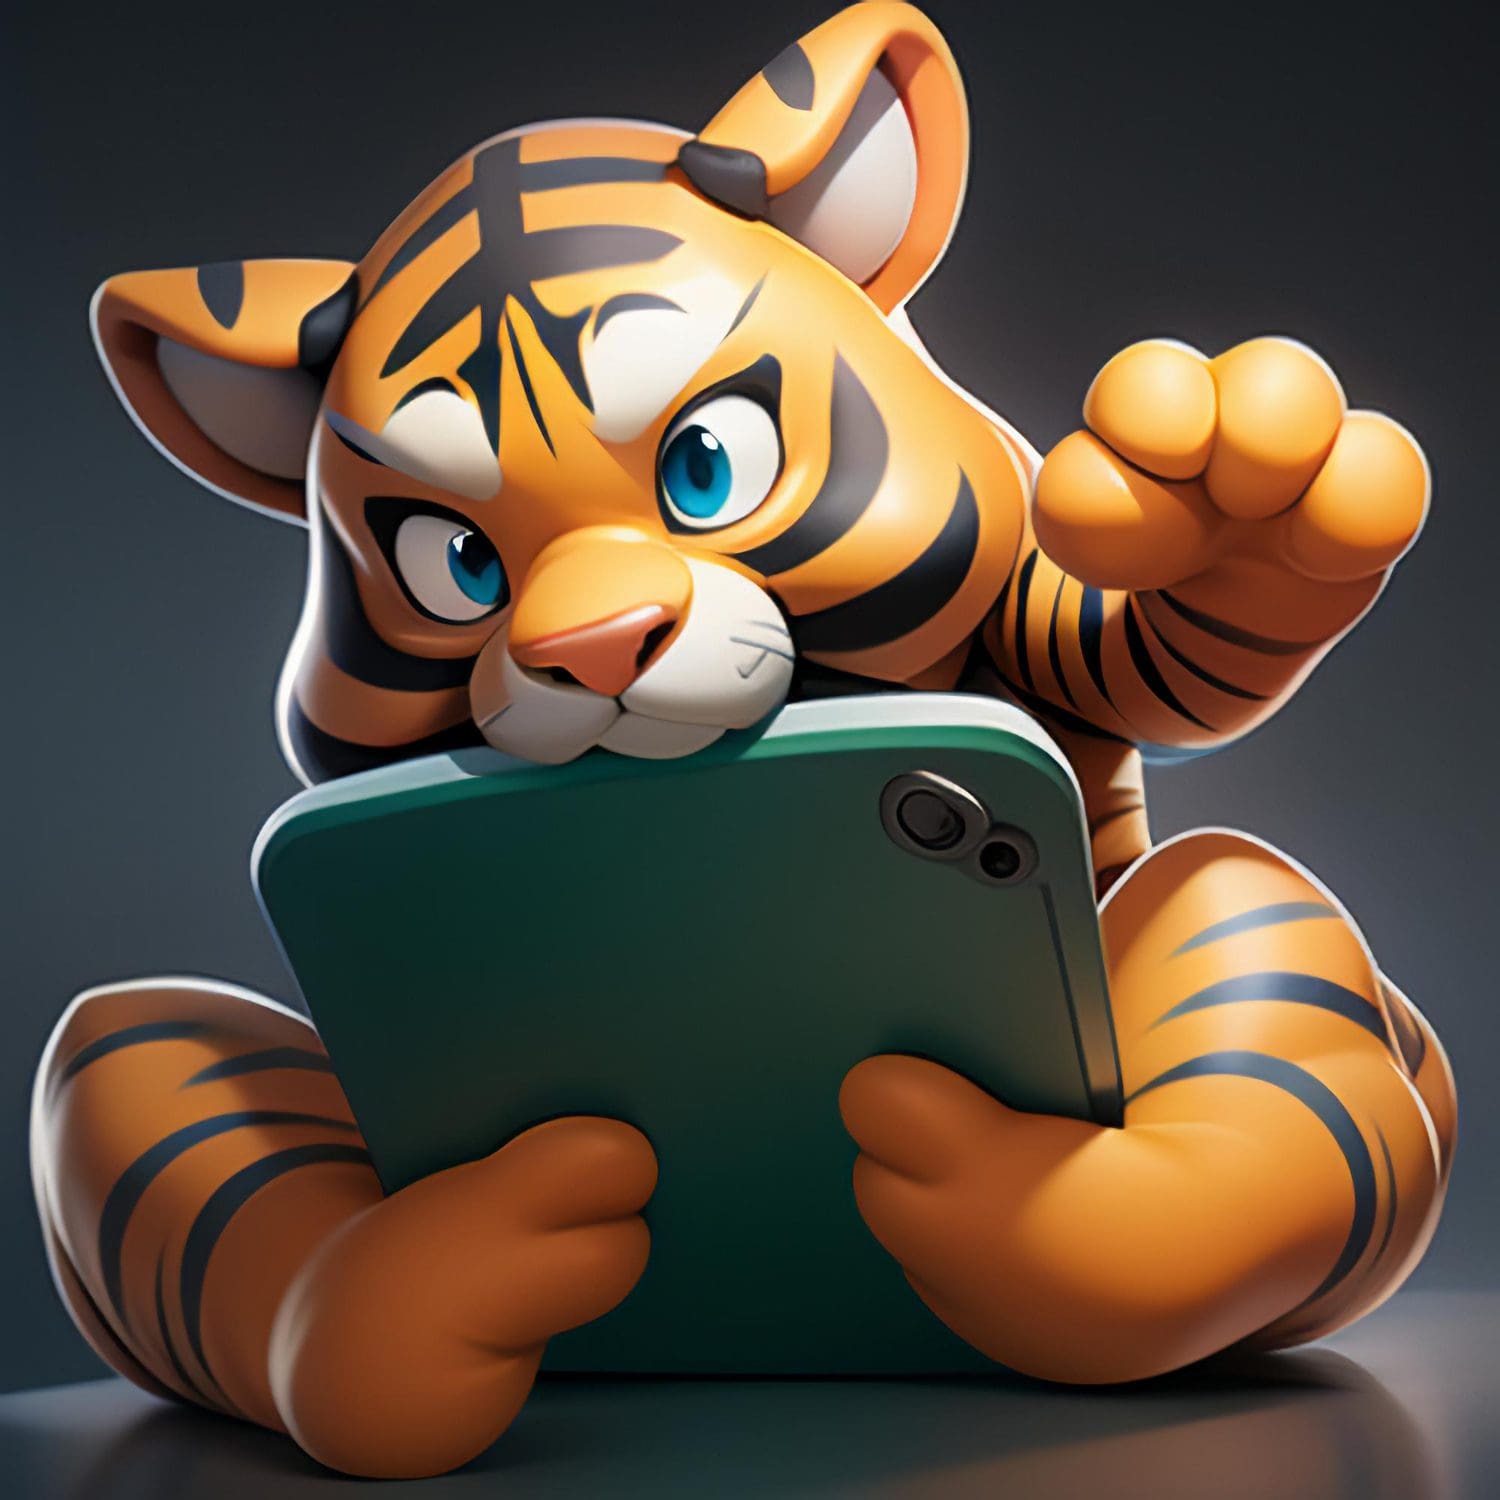 tiger cartoon animal icon image cute comic style wild animal illustration 3d rendering c4d 1